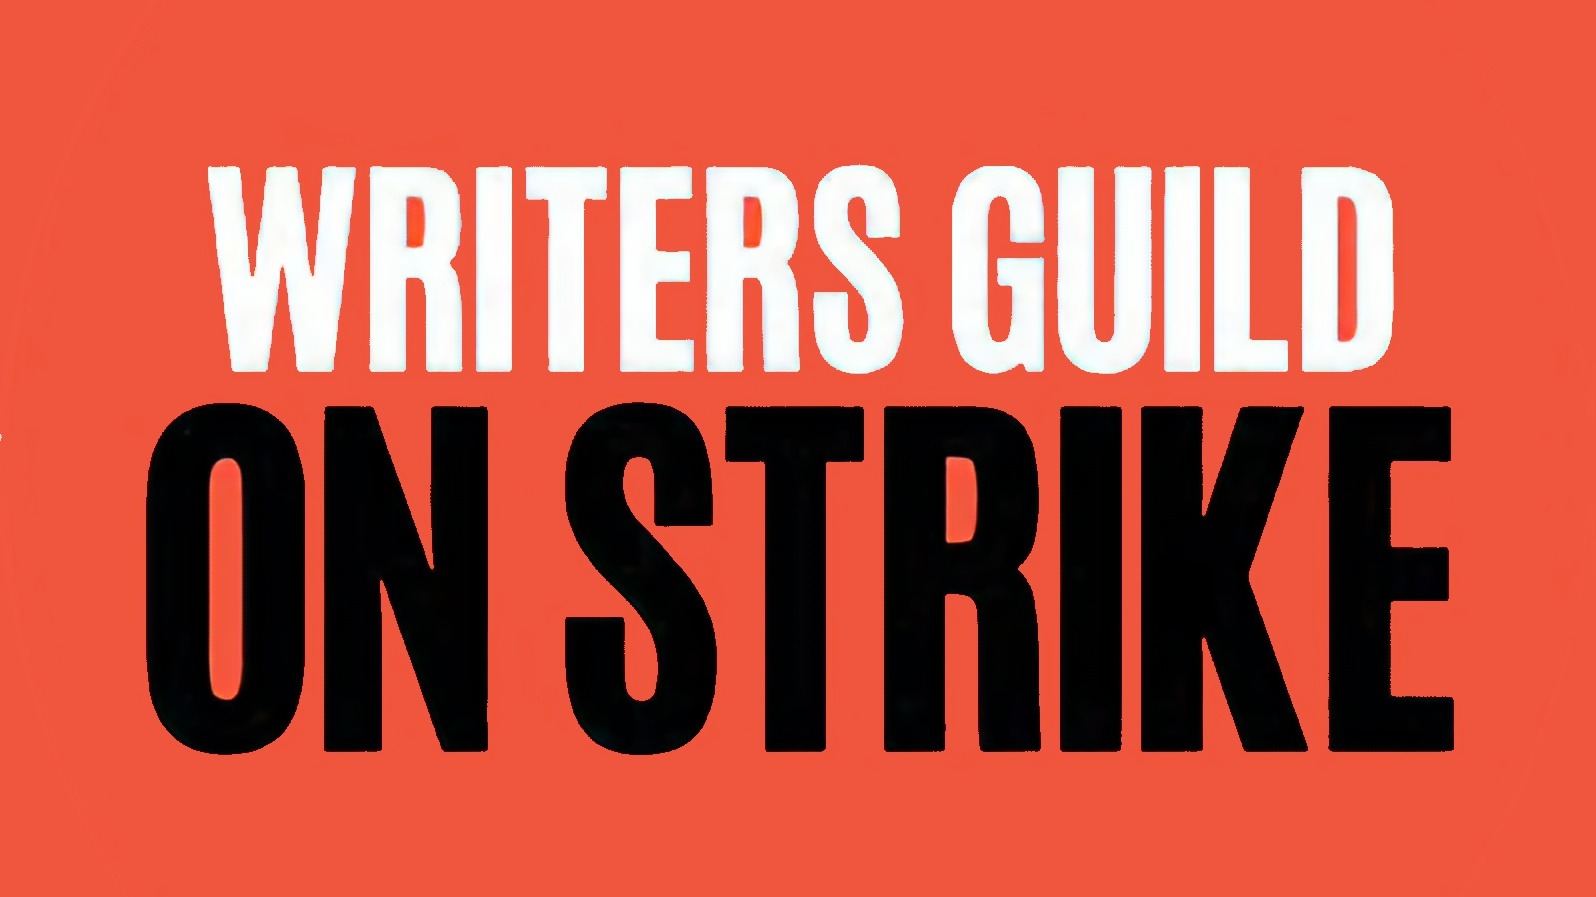 Writers Guild on strike. Background: Dark orange. Font: white and black